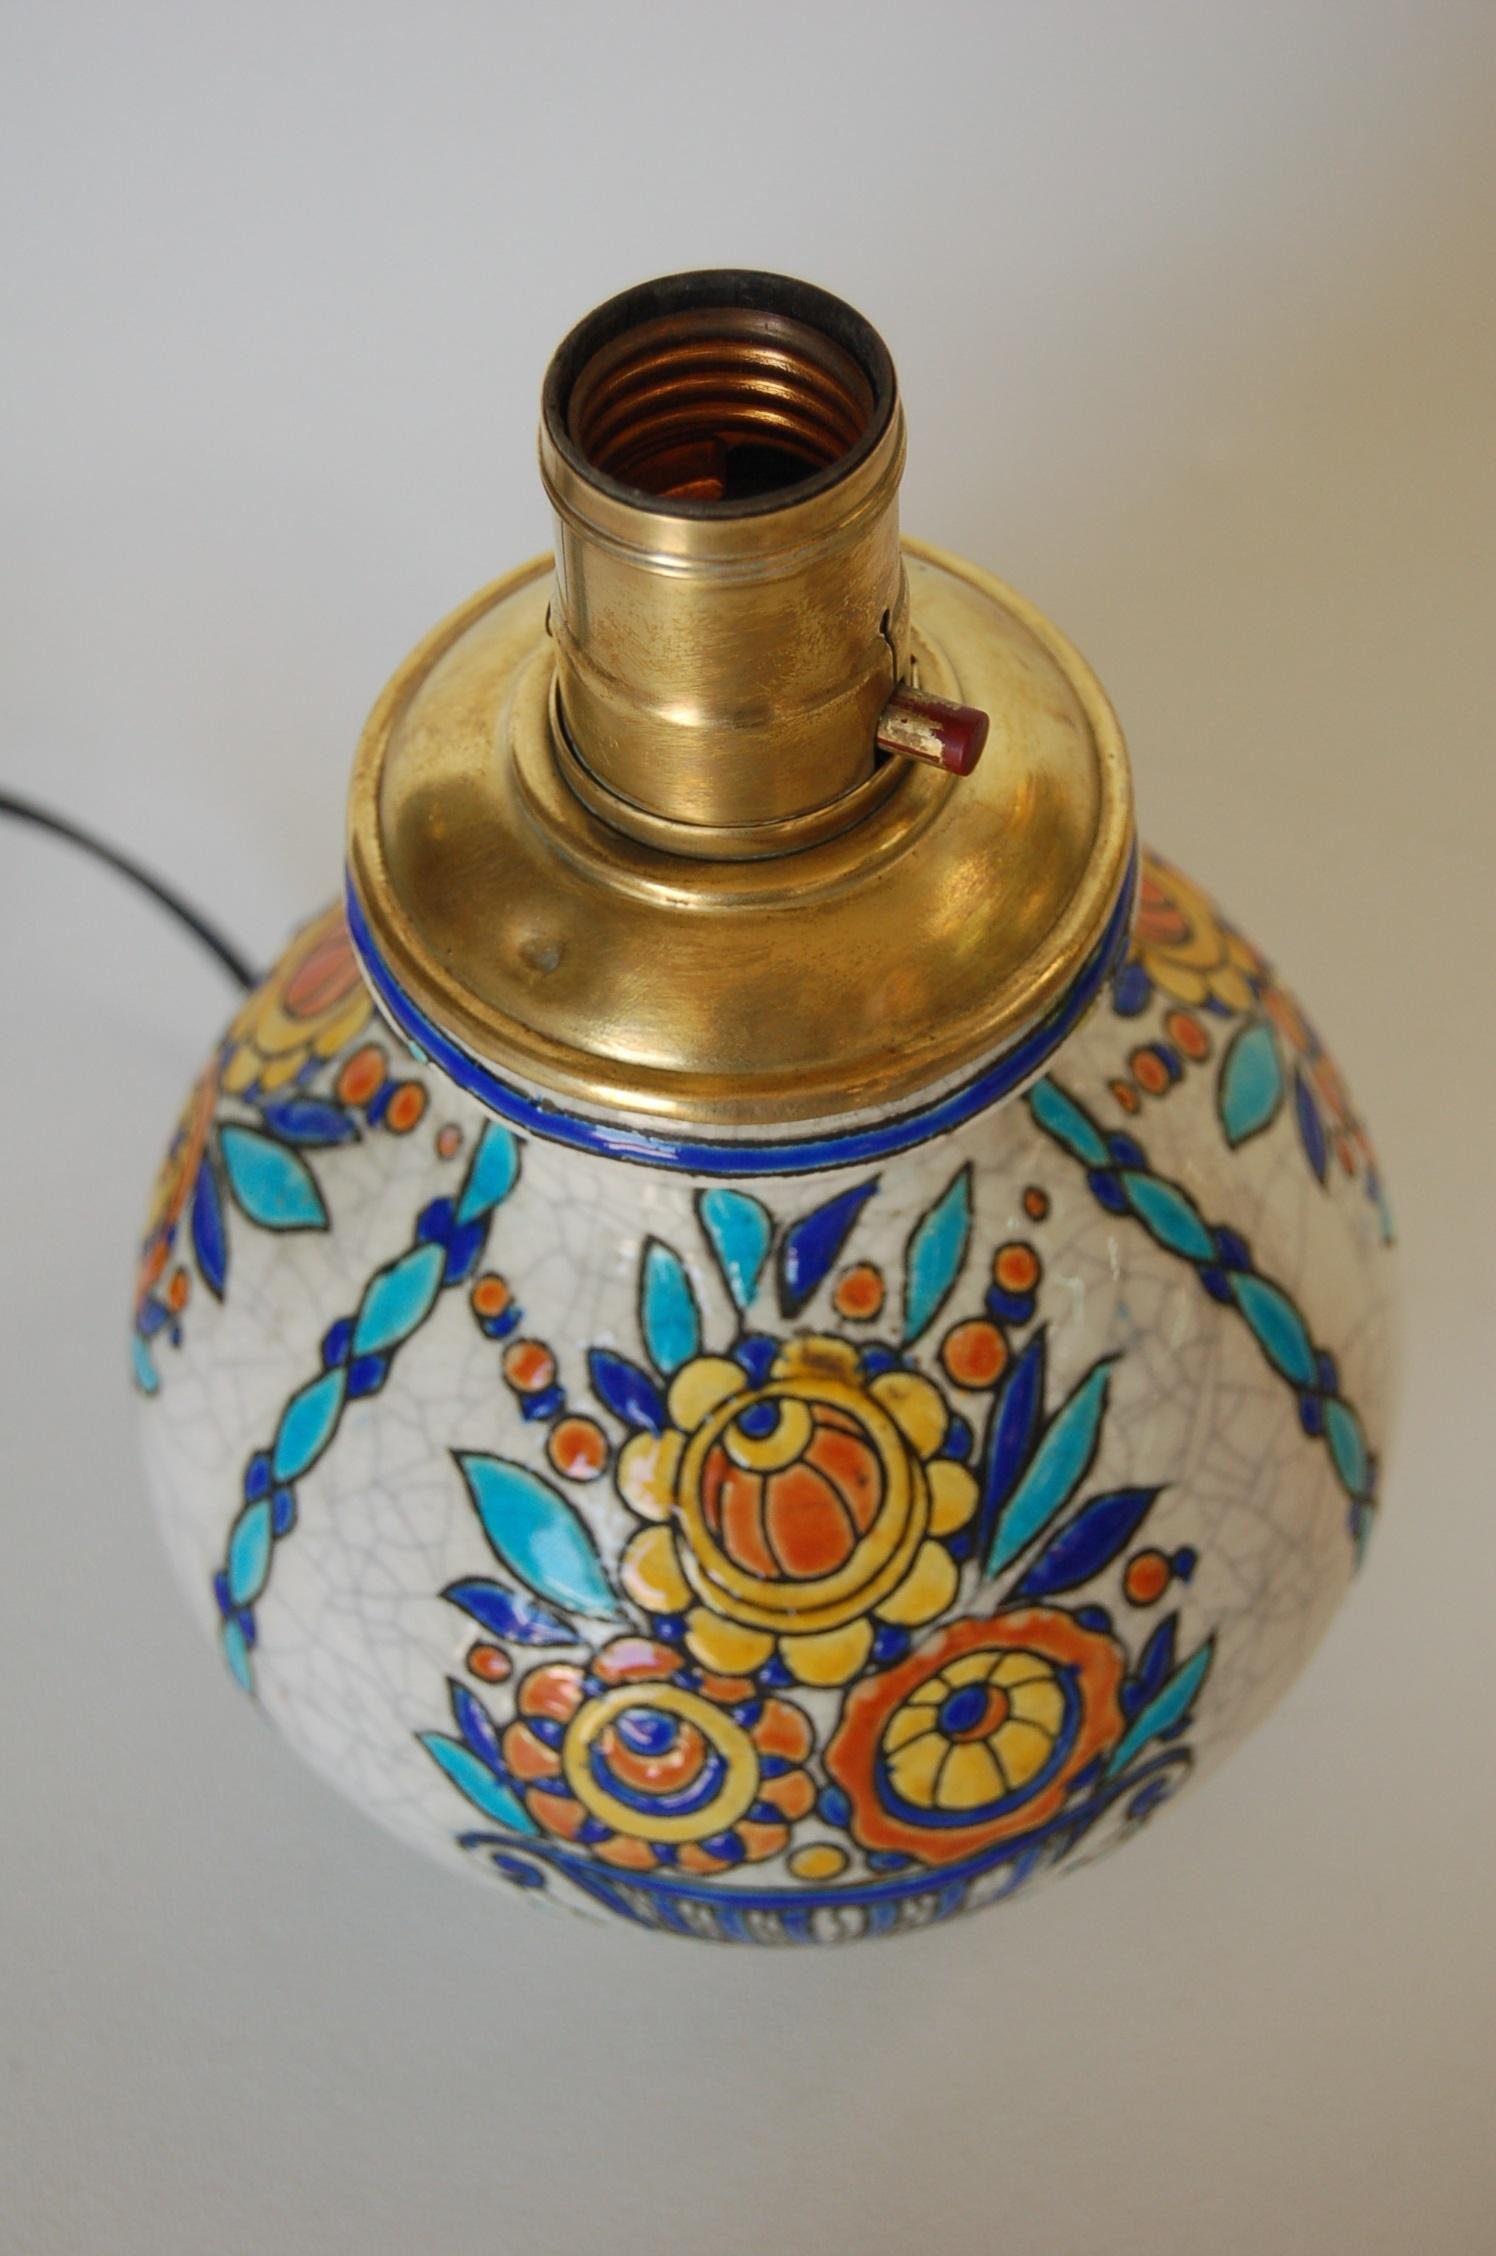 Antique floral ceramic table lamp by Belgian Designer Boch Freres Keramis. Measure 6